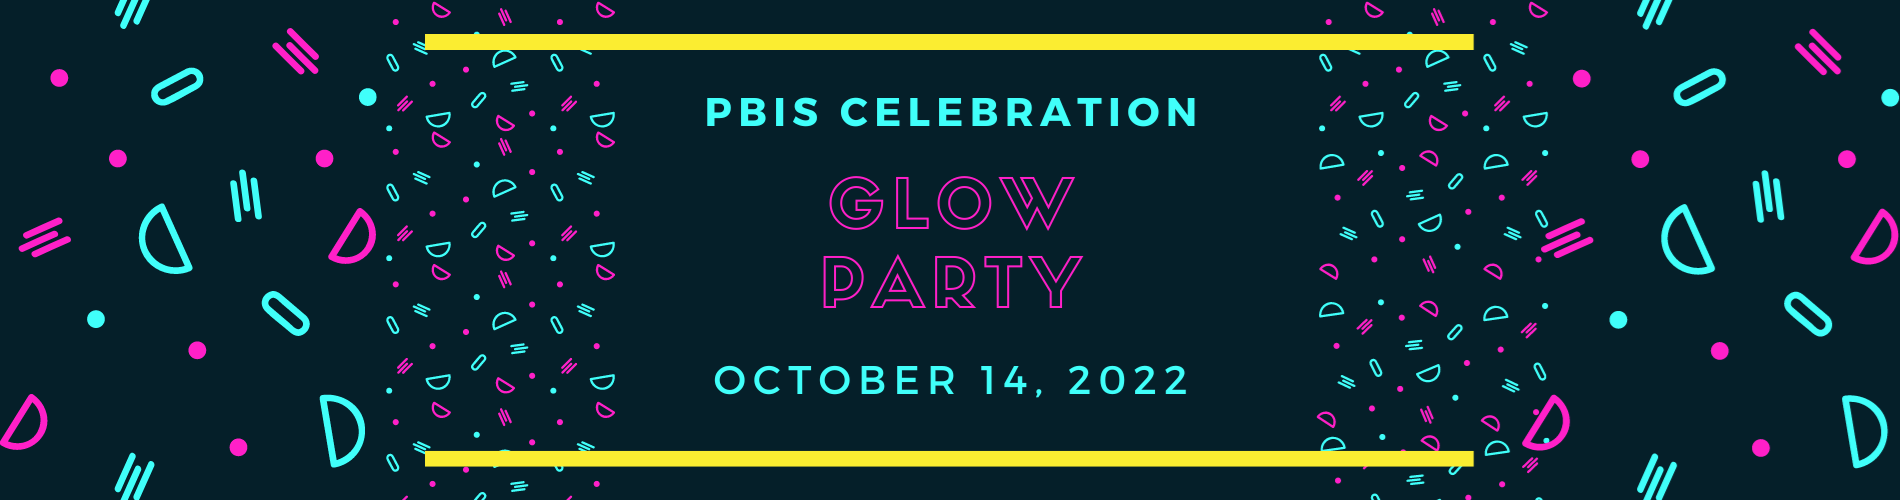 PBIS Celebration Glow Party